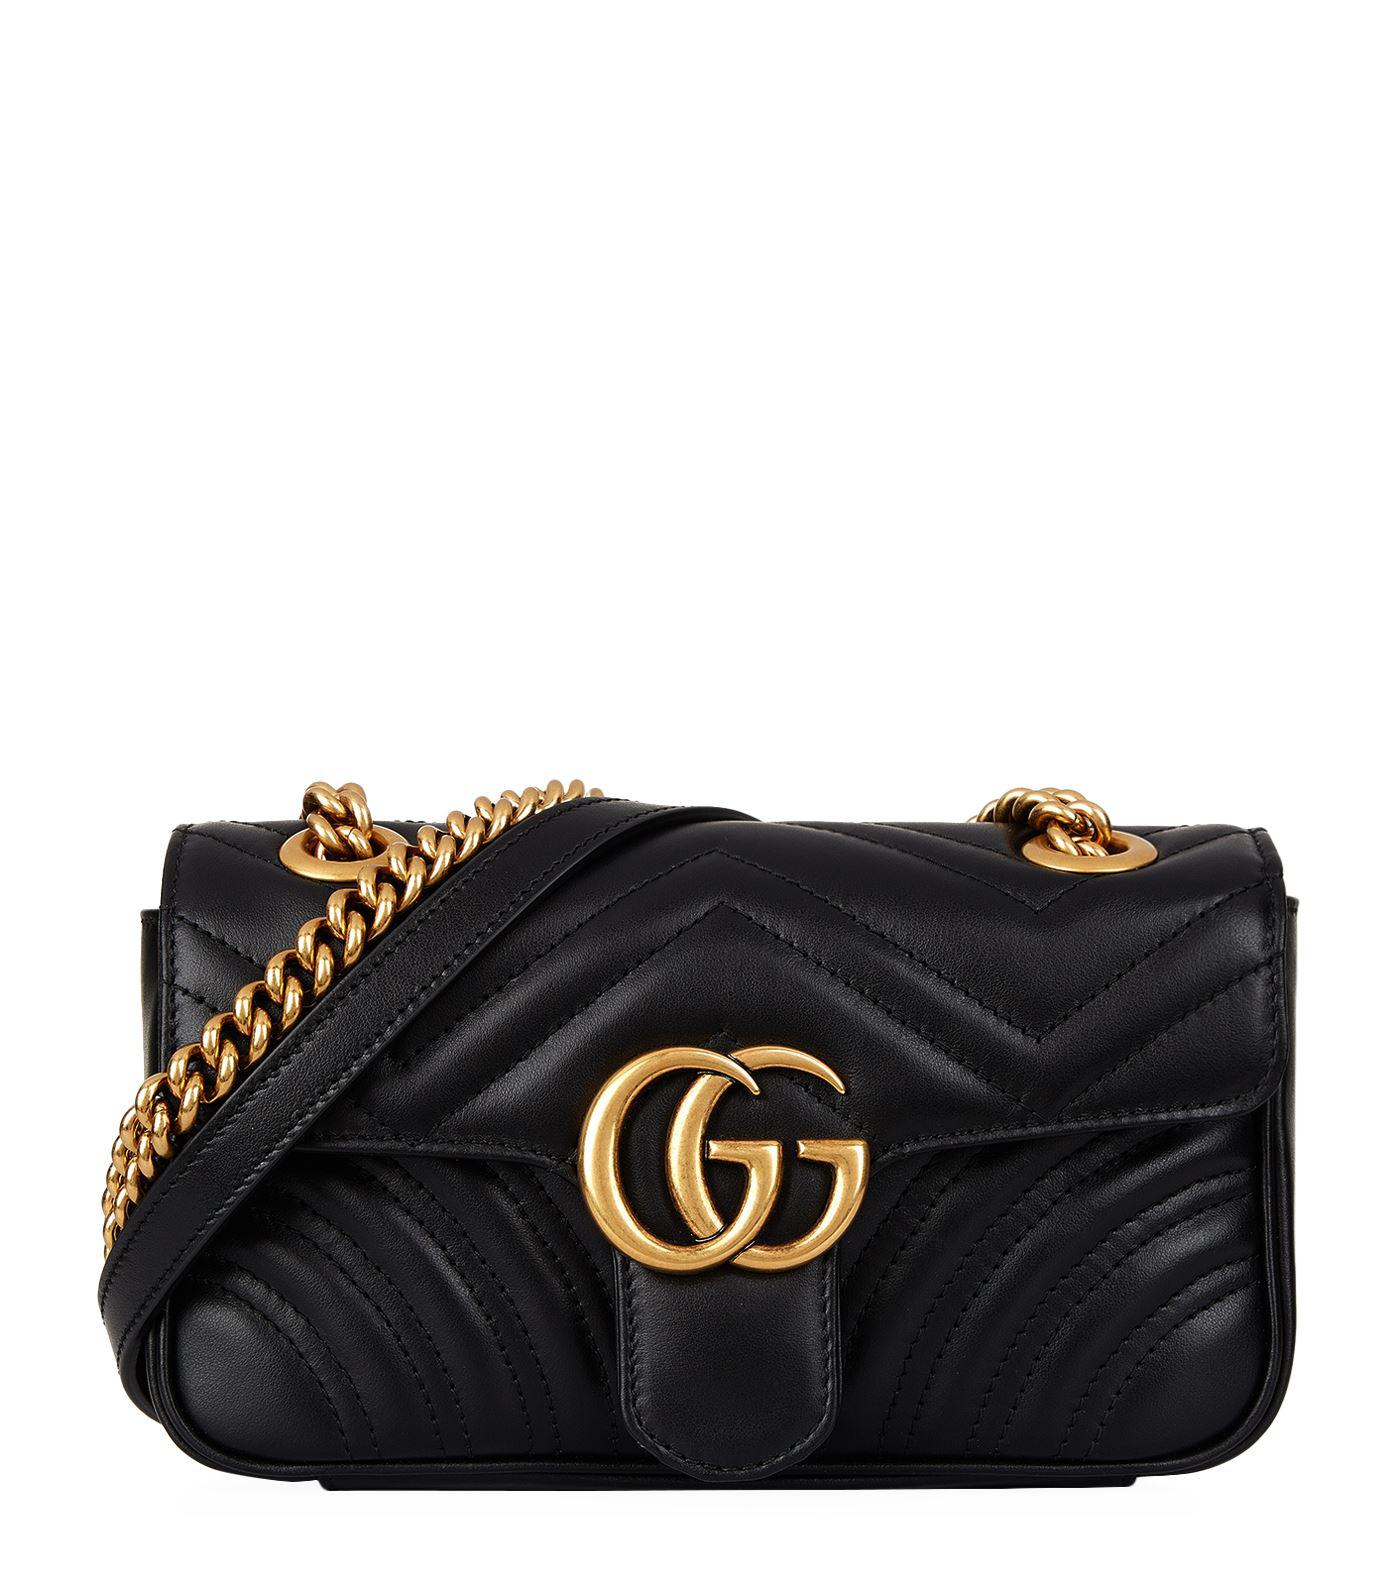 Lyst - Gucci Mini Marmont Chevron Shoulder Bag in Black